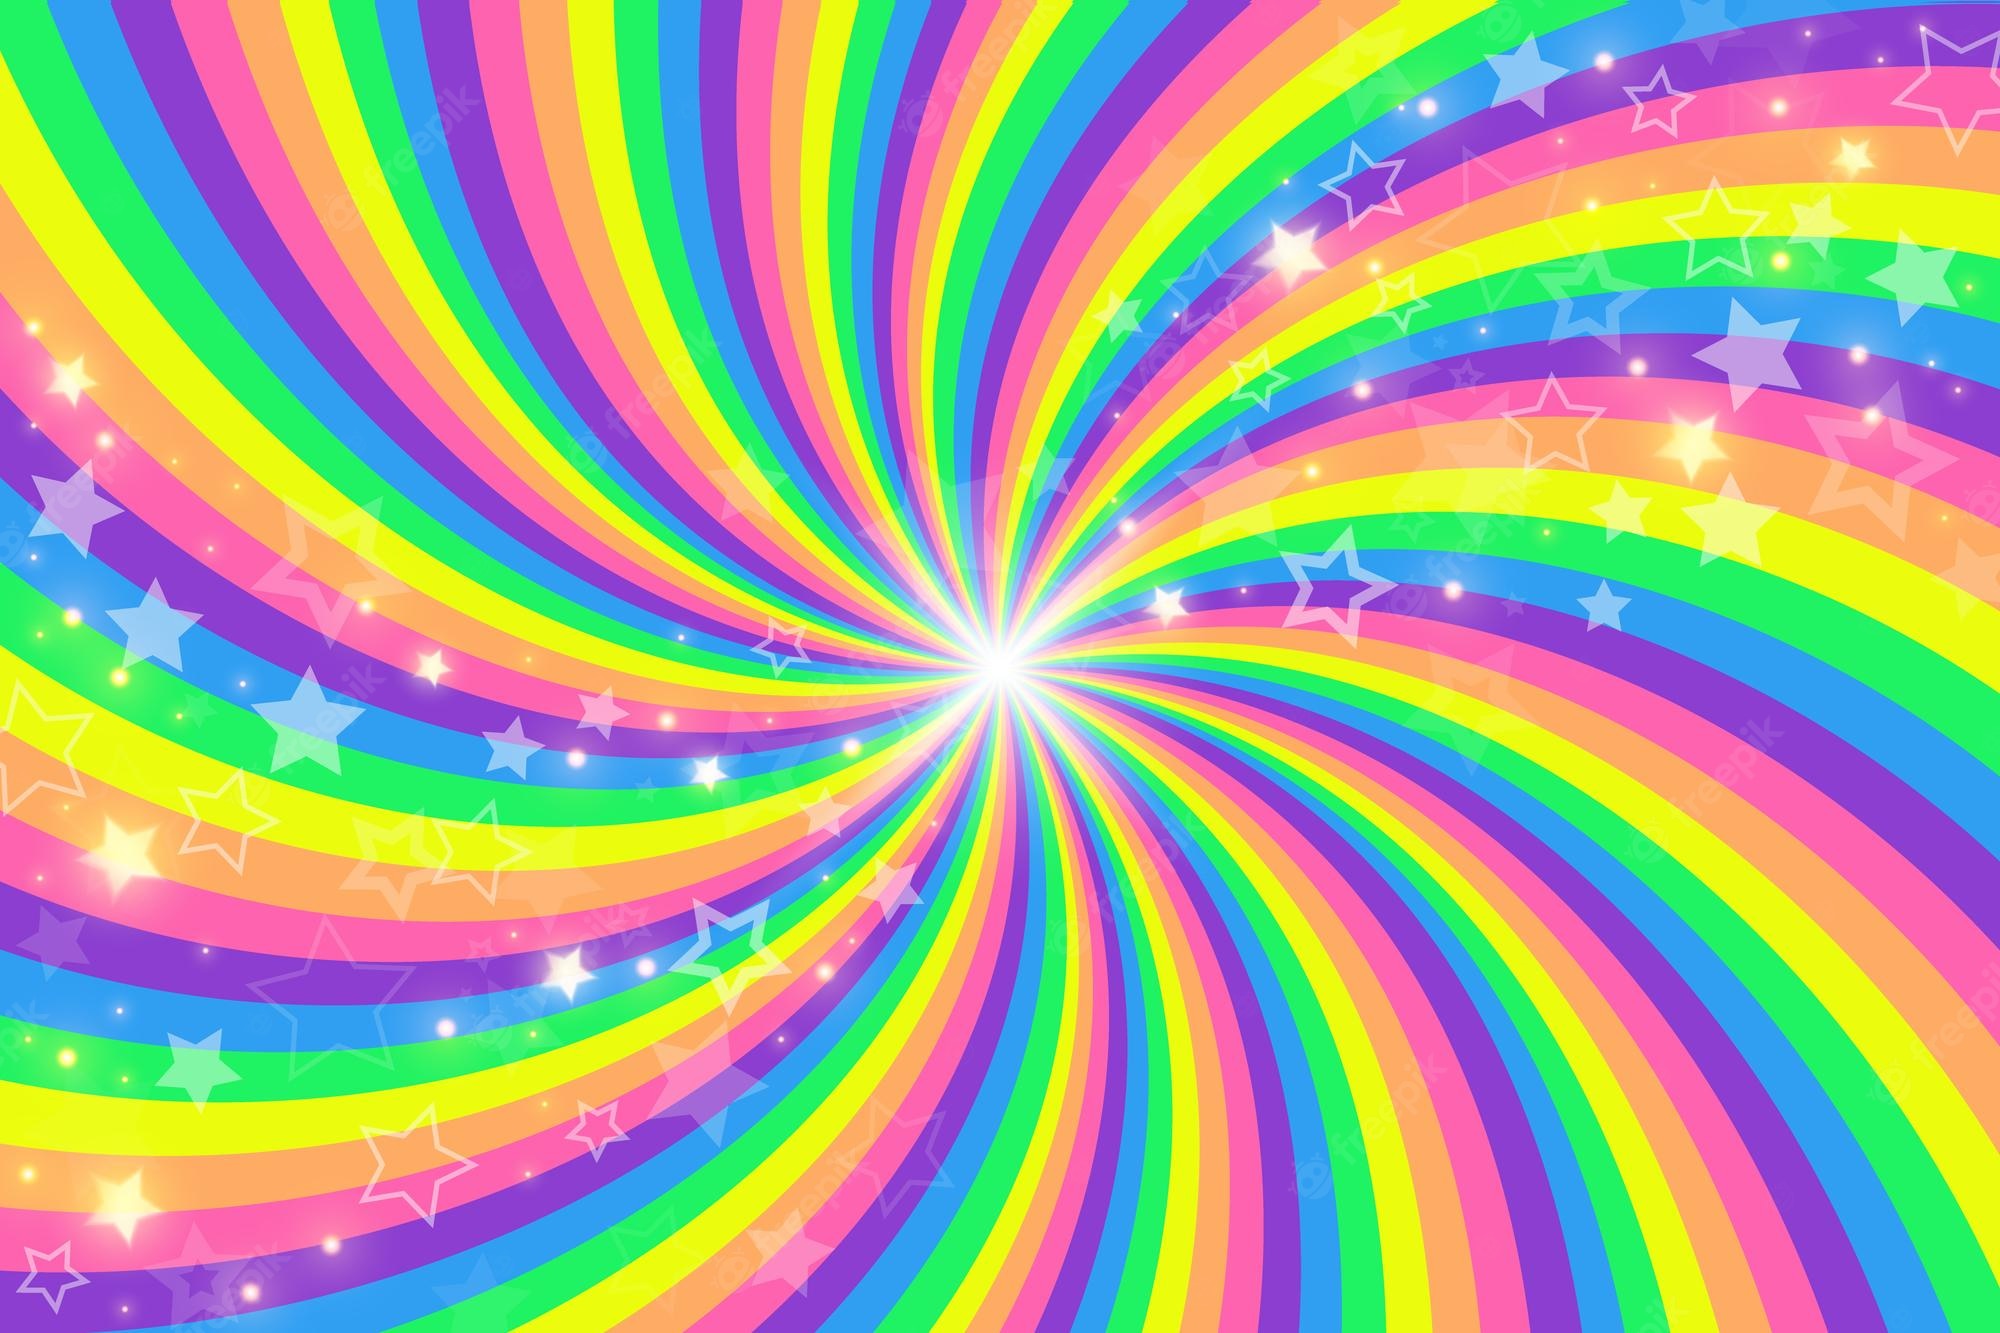 Premium Vector. Rainbow swirl background with stars radial gradient rainbow of twisted spiral vector illustration